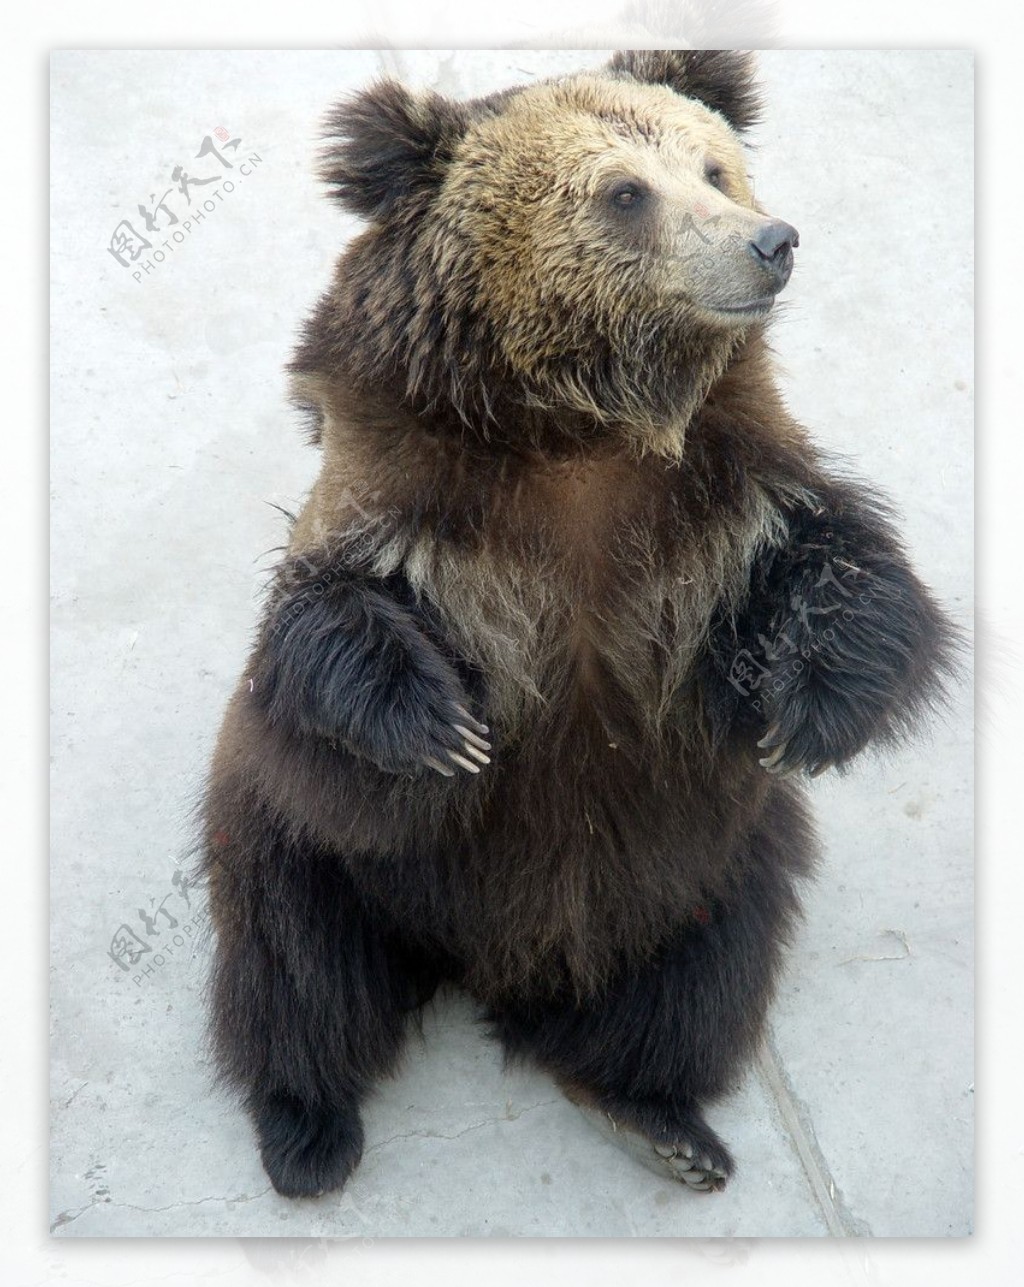 Lucu Beruang - Bears Smiling - 1920x1200 Wallpaper - teahub.io